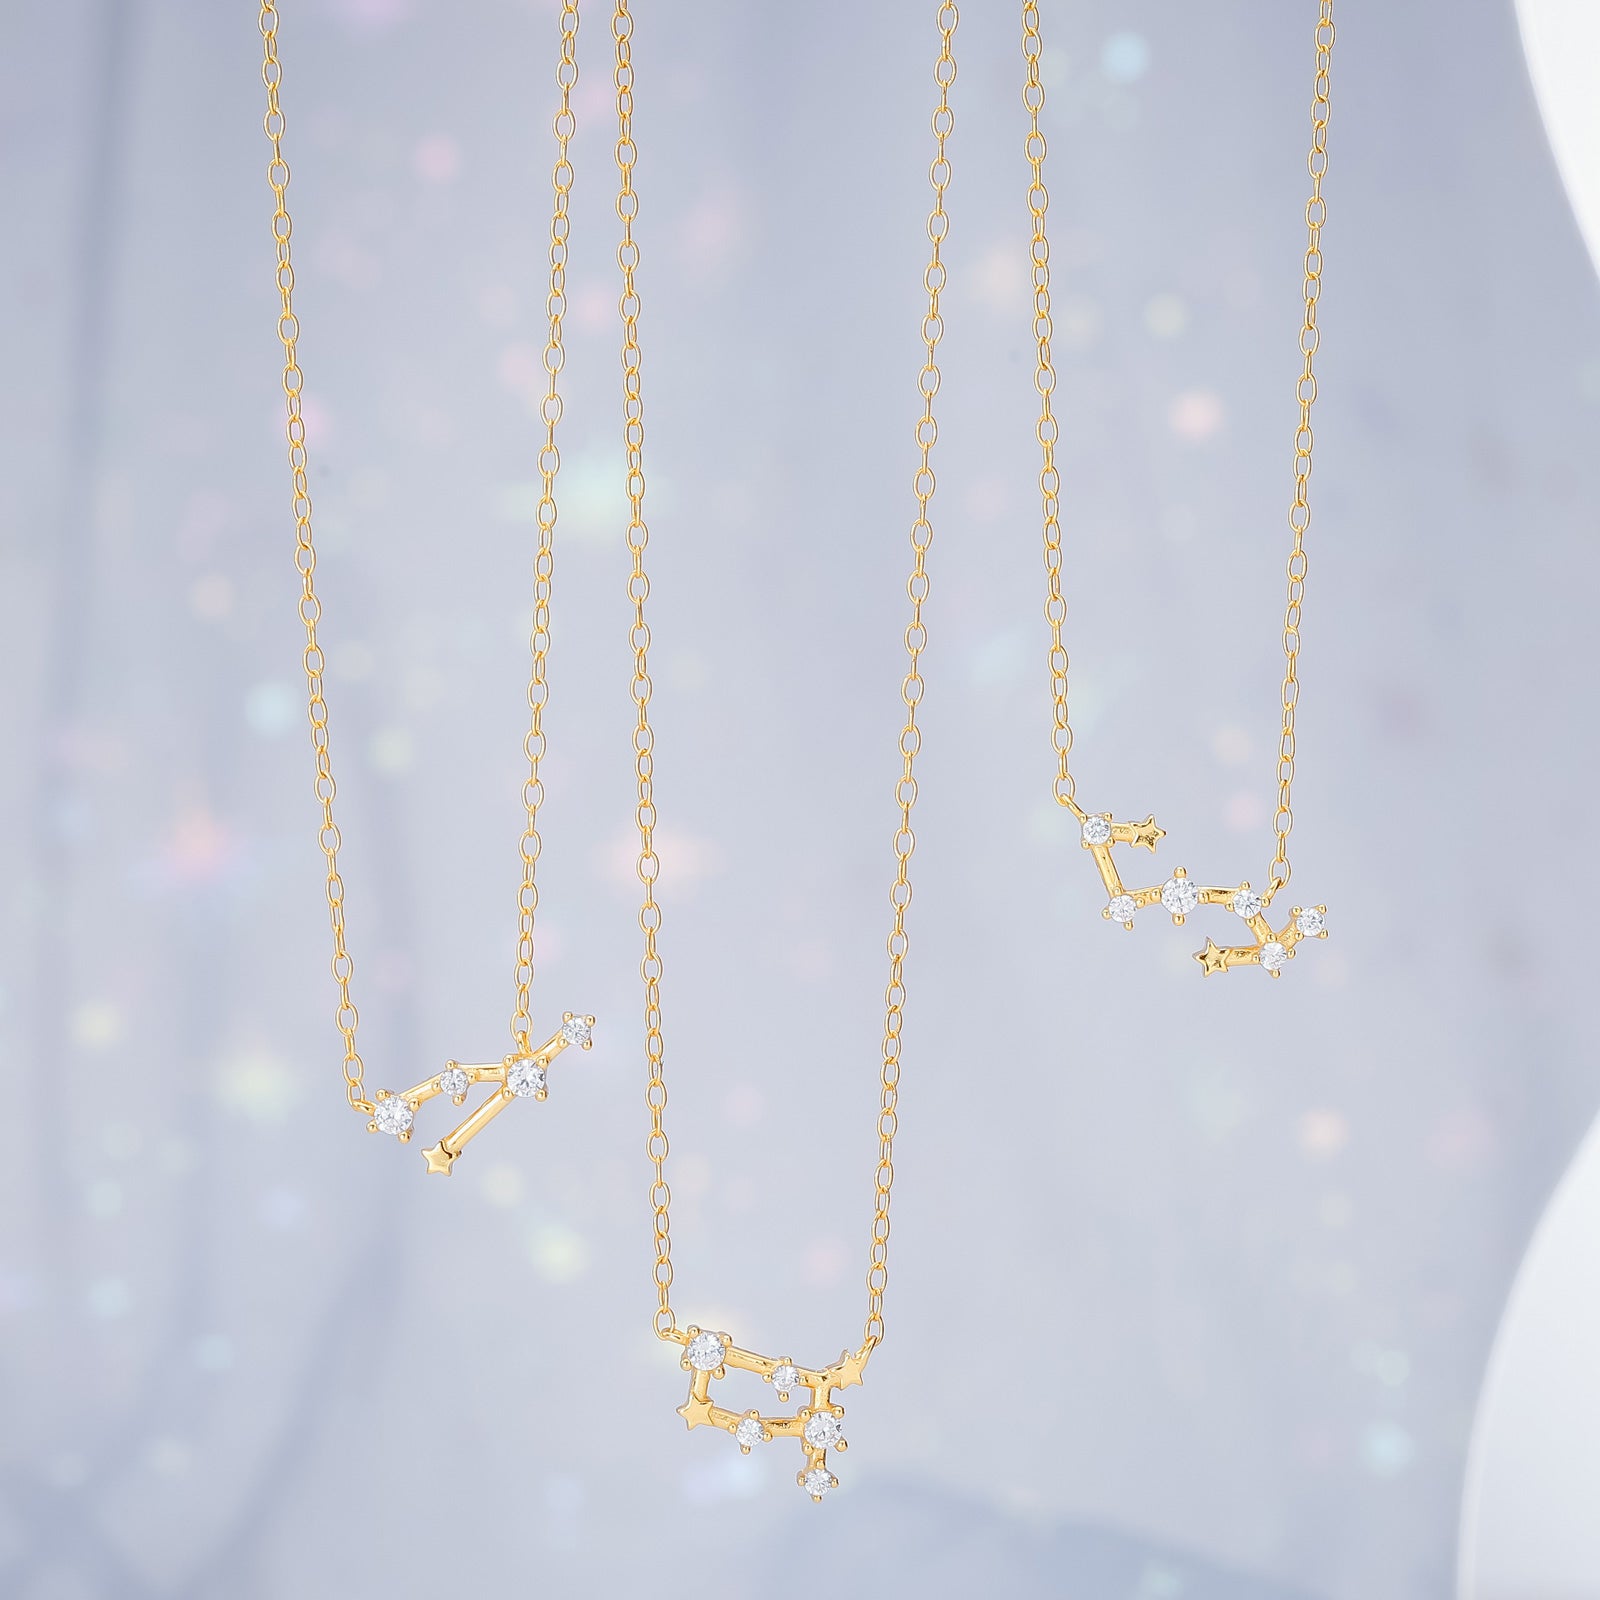 Constellation Silver Fashion Necklace